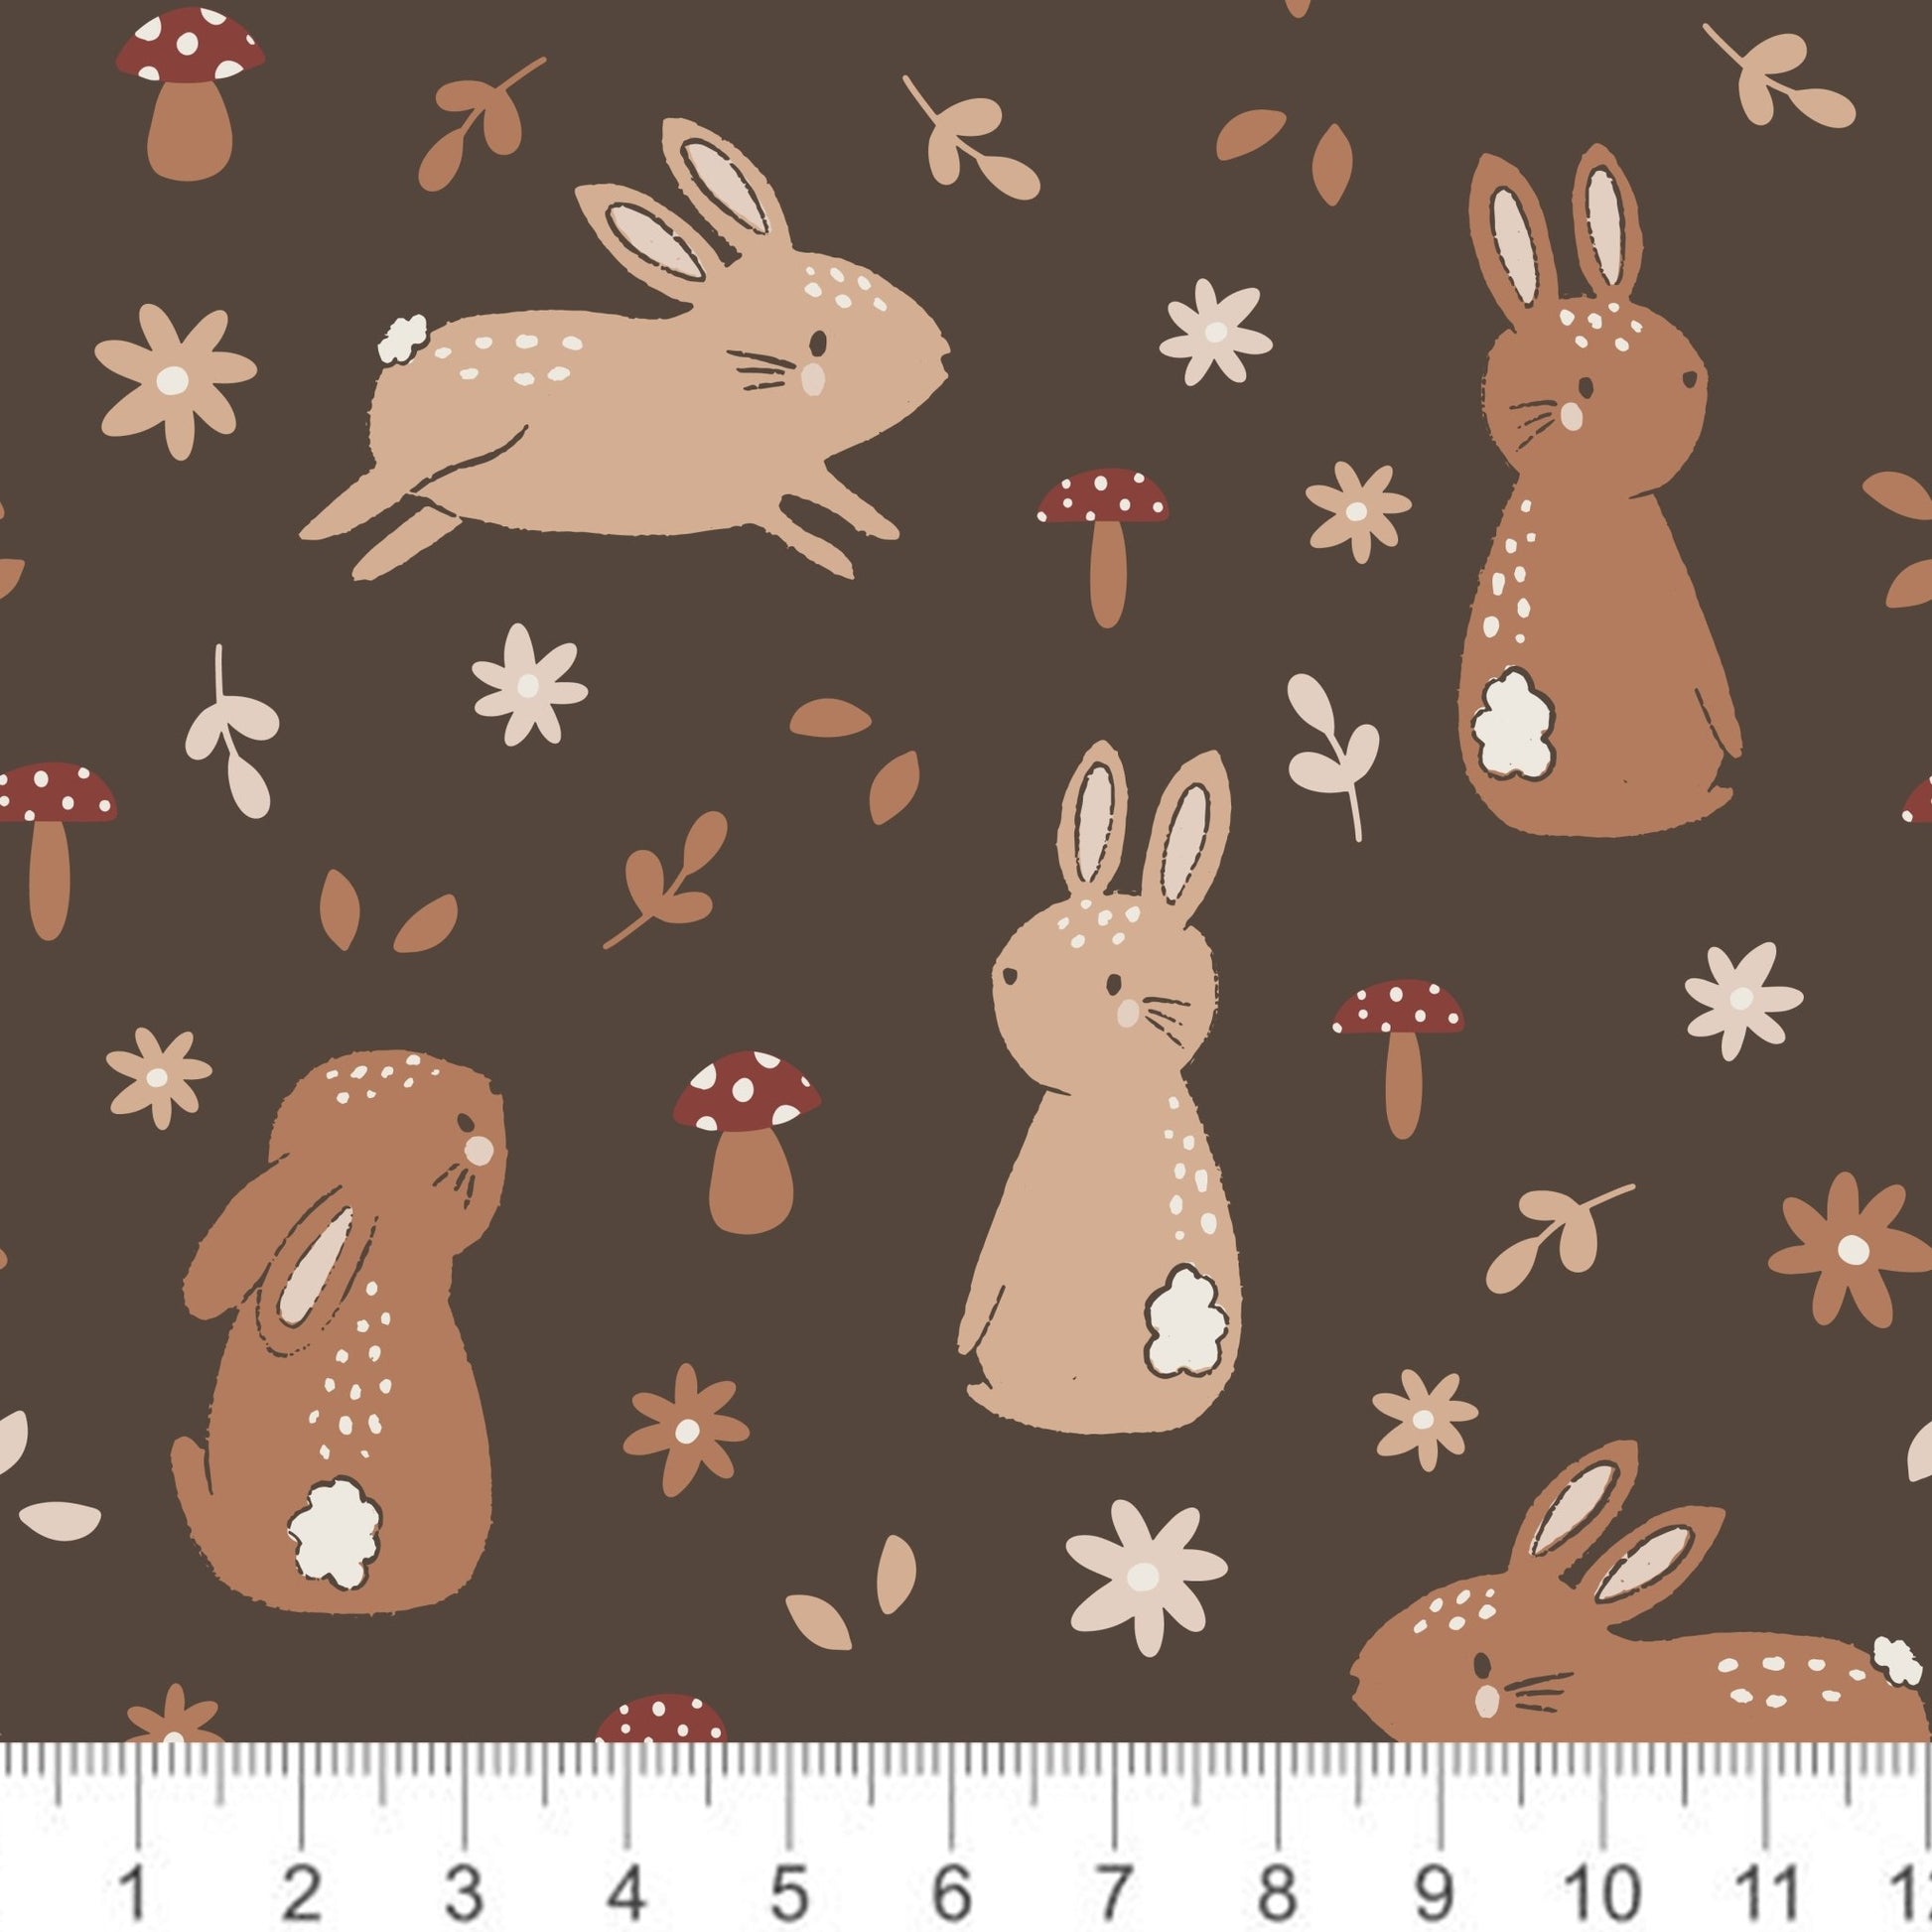 Raspberry Pattern Co - Bunnies on Brown - Little Rhody Sewing Co.